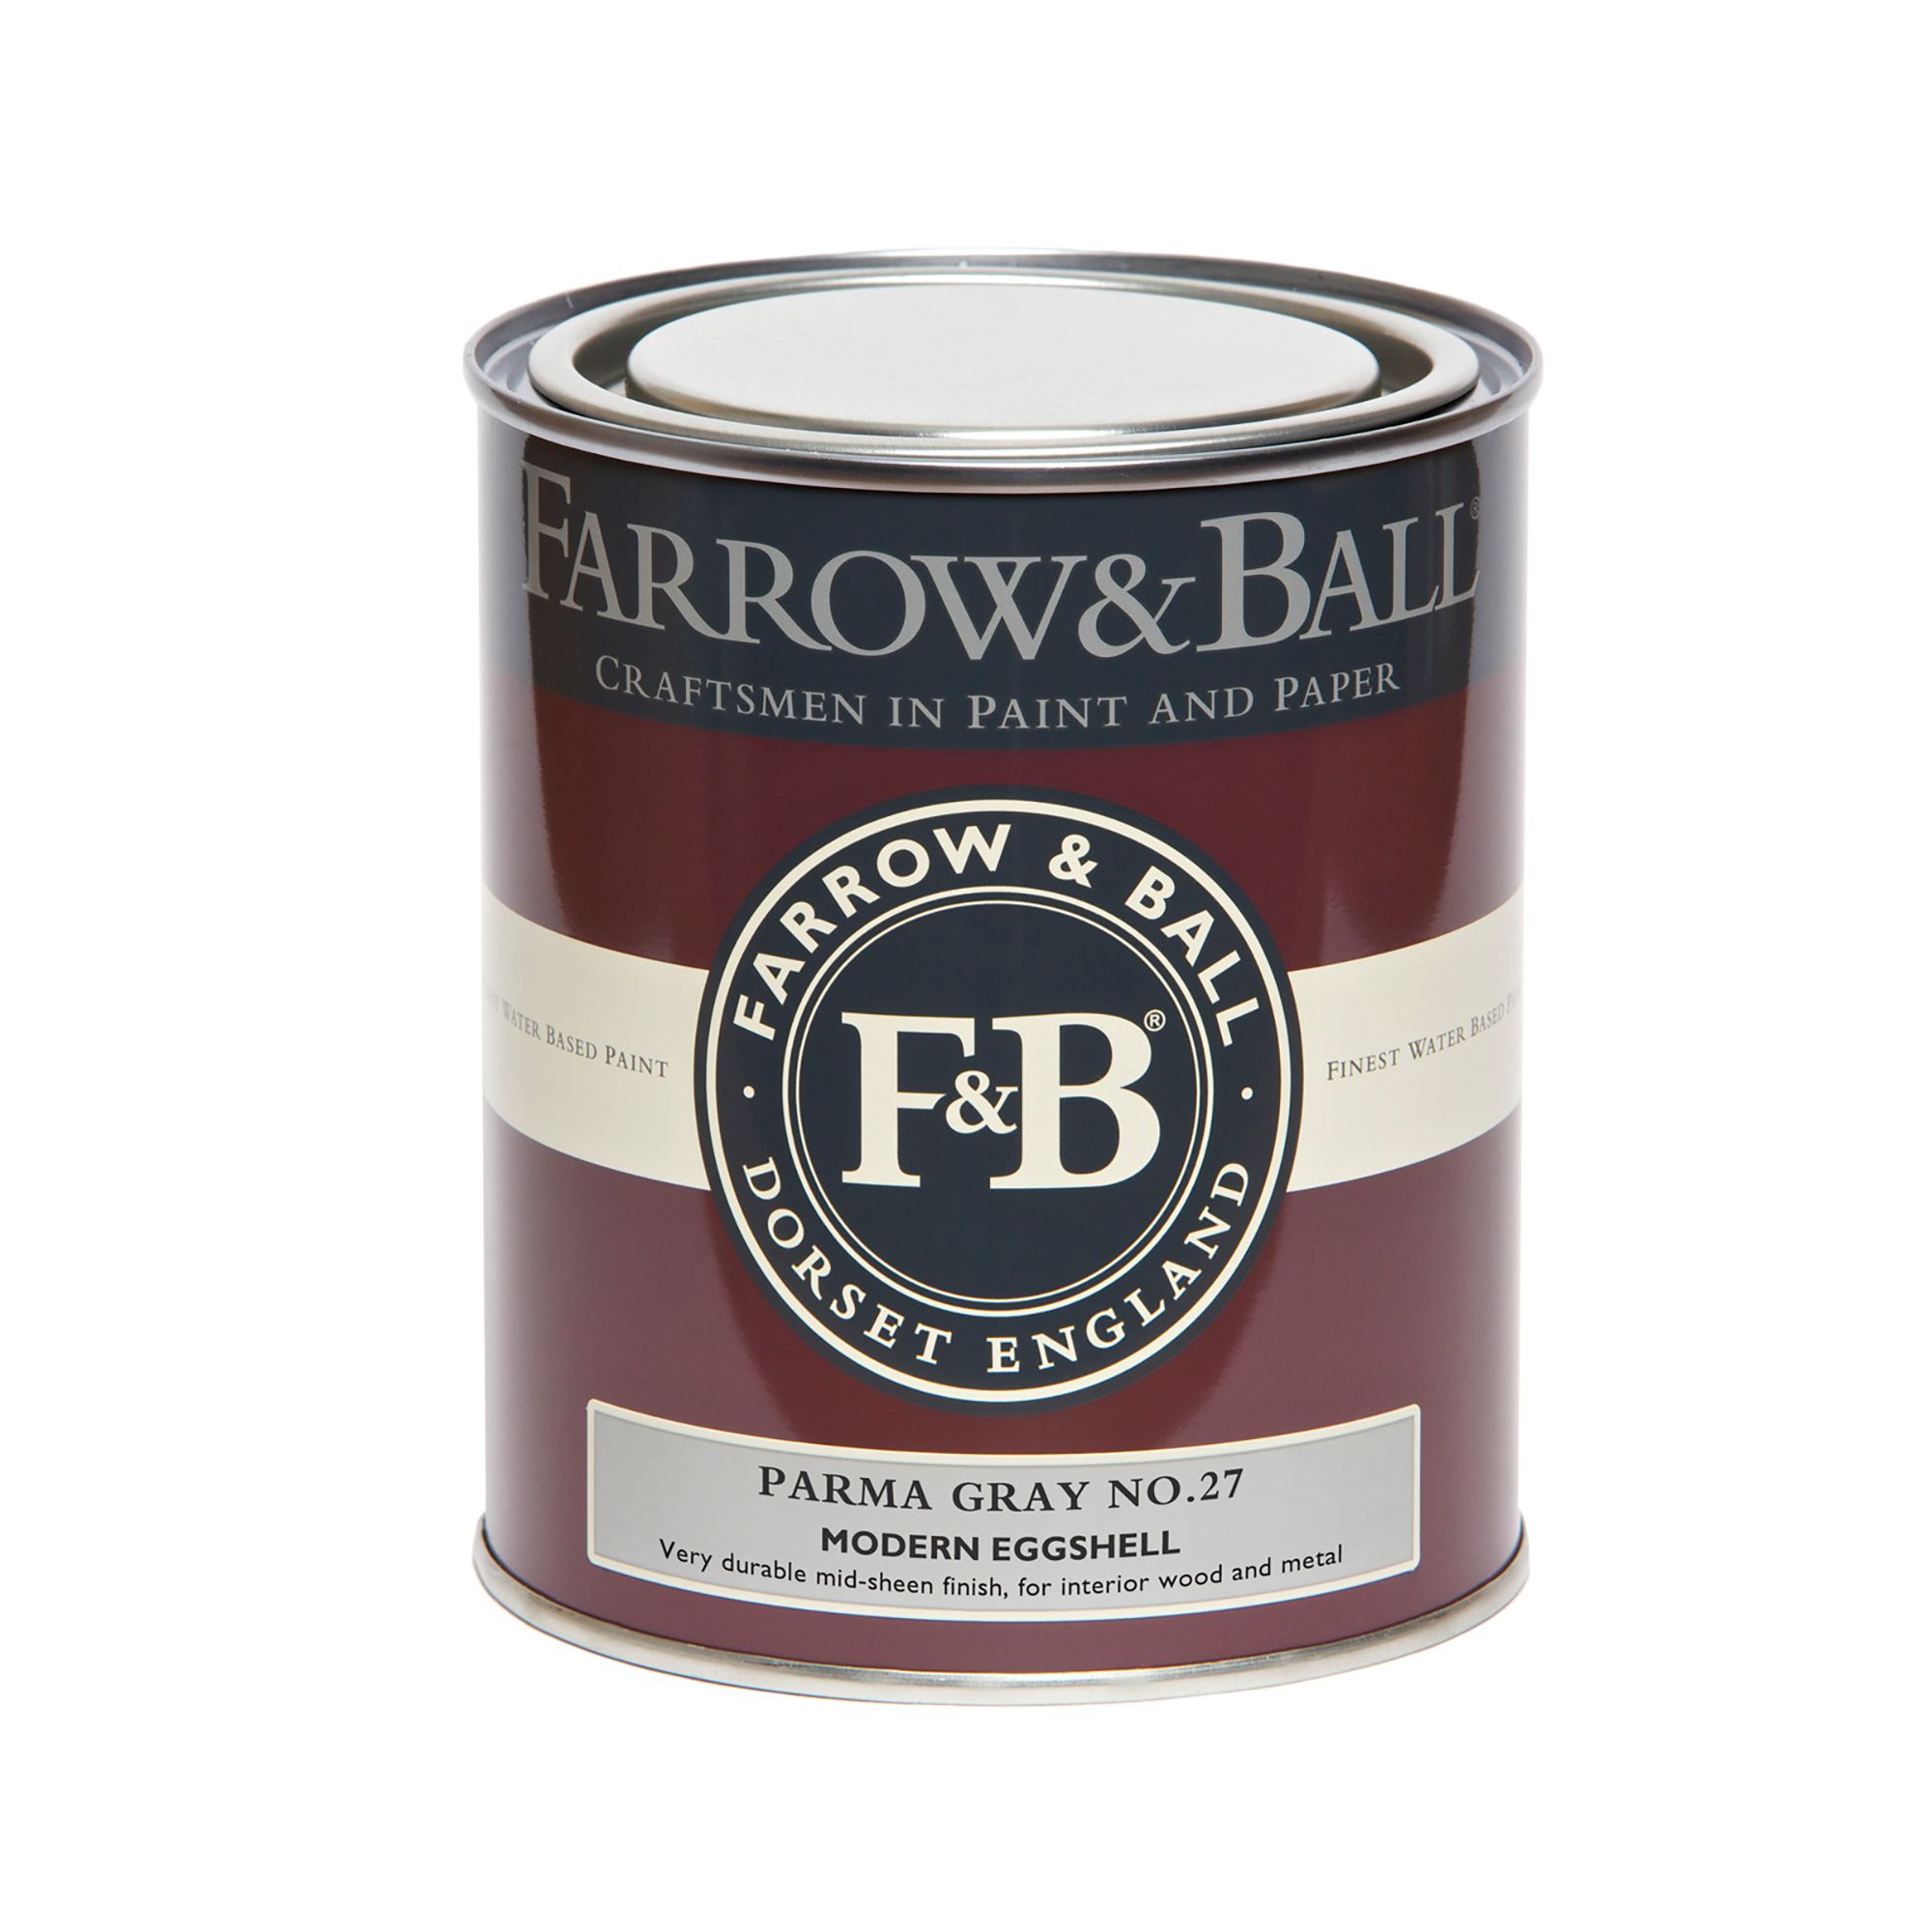 Farrow & Ball Modern Parma Gray No.27 Eggshell Paint, 750ml